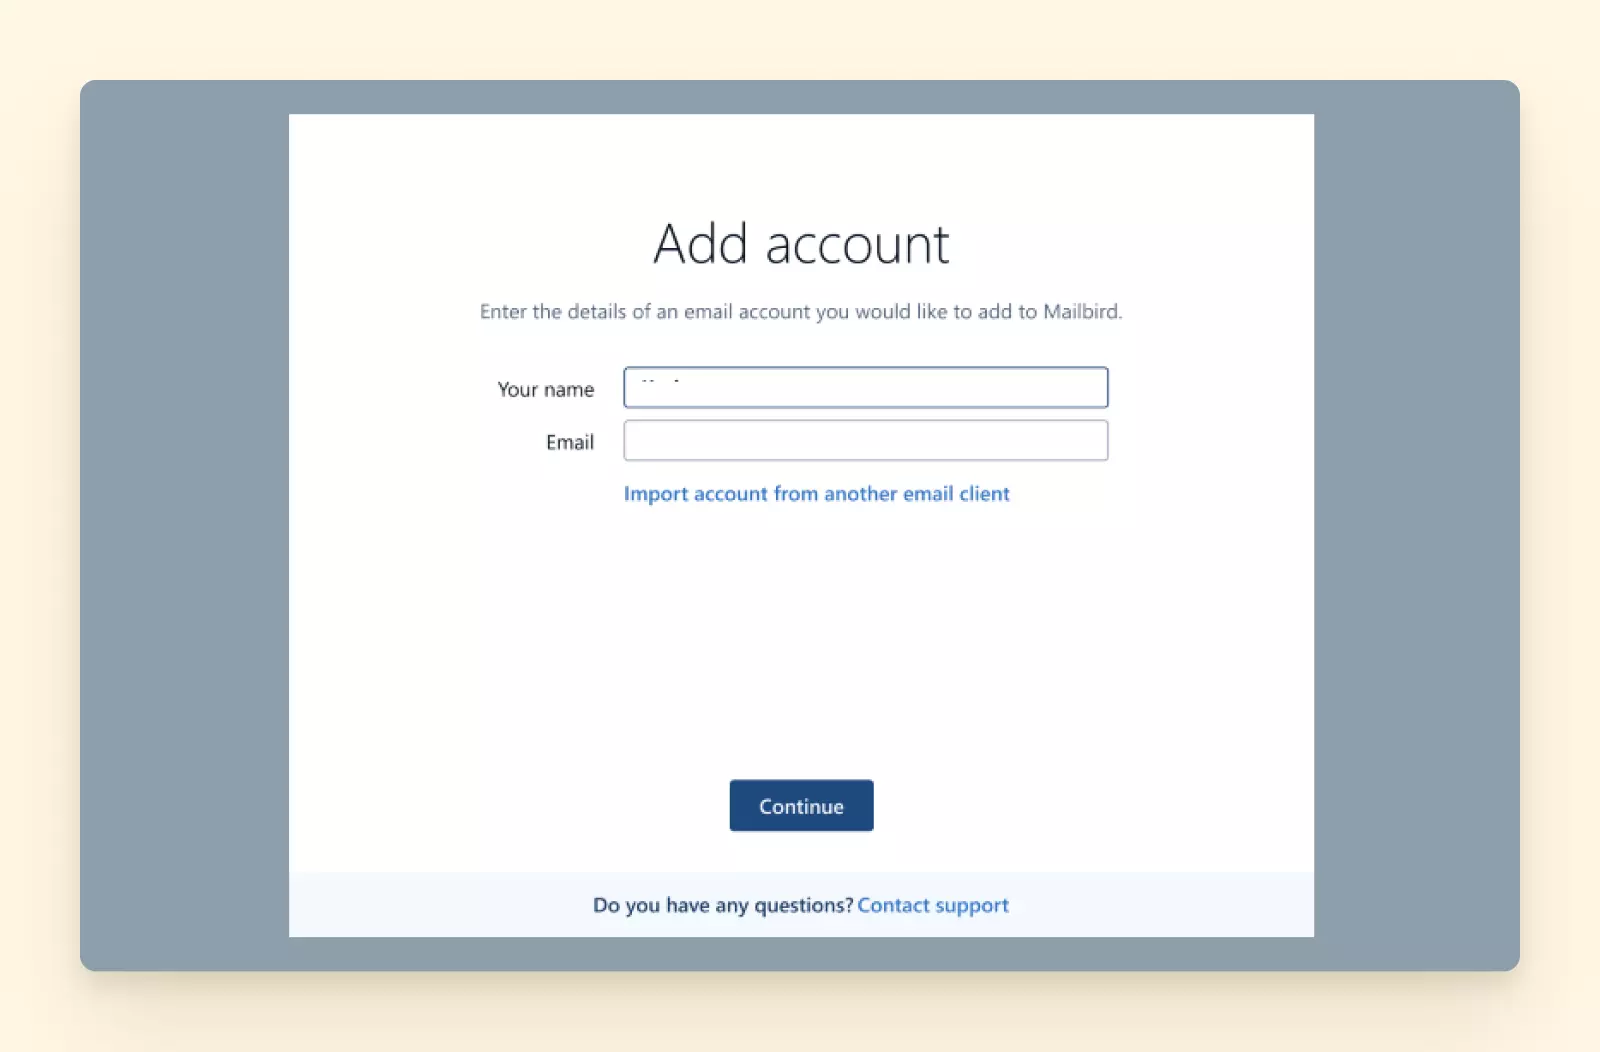 Adding account window in Mailbird